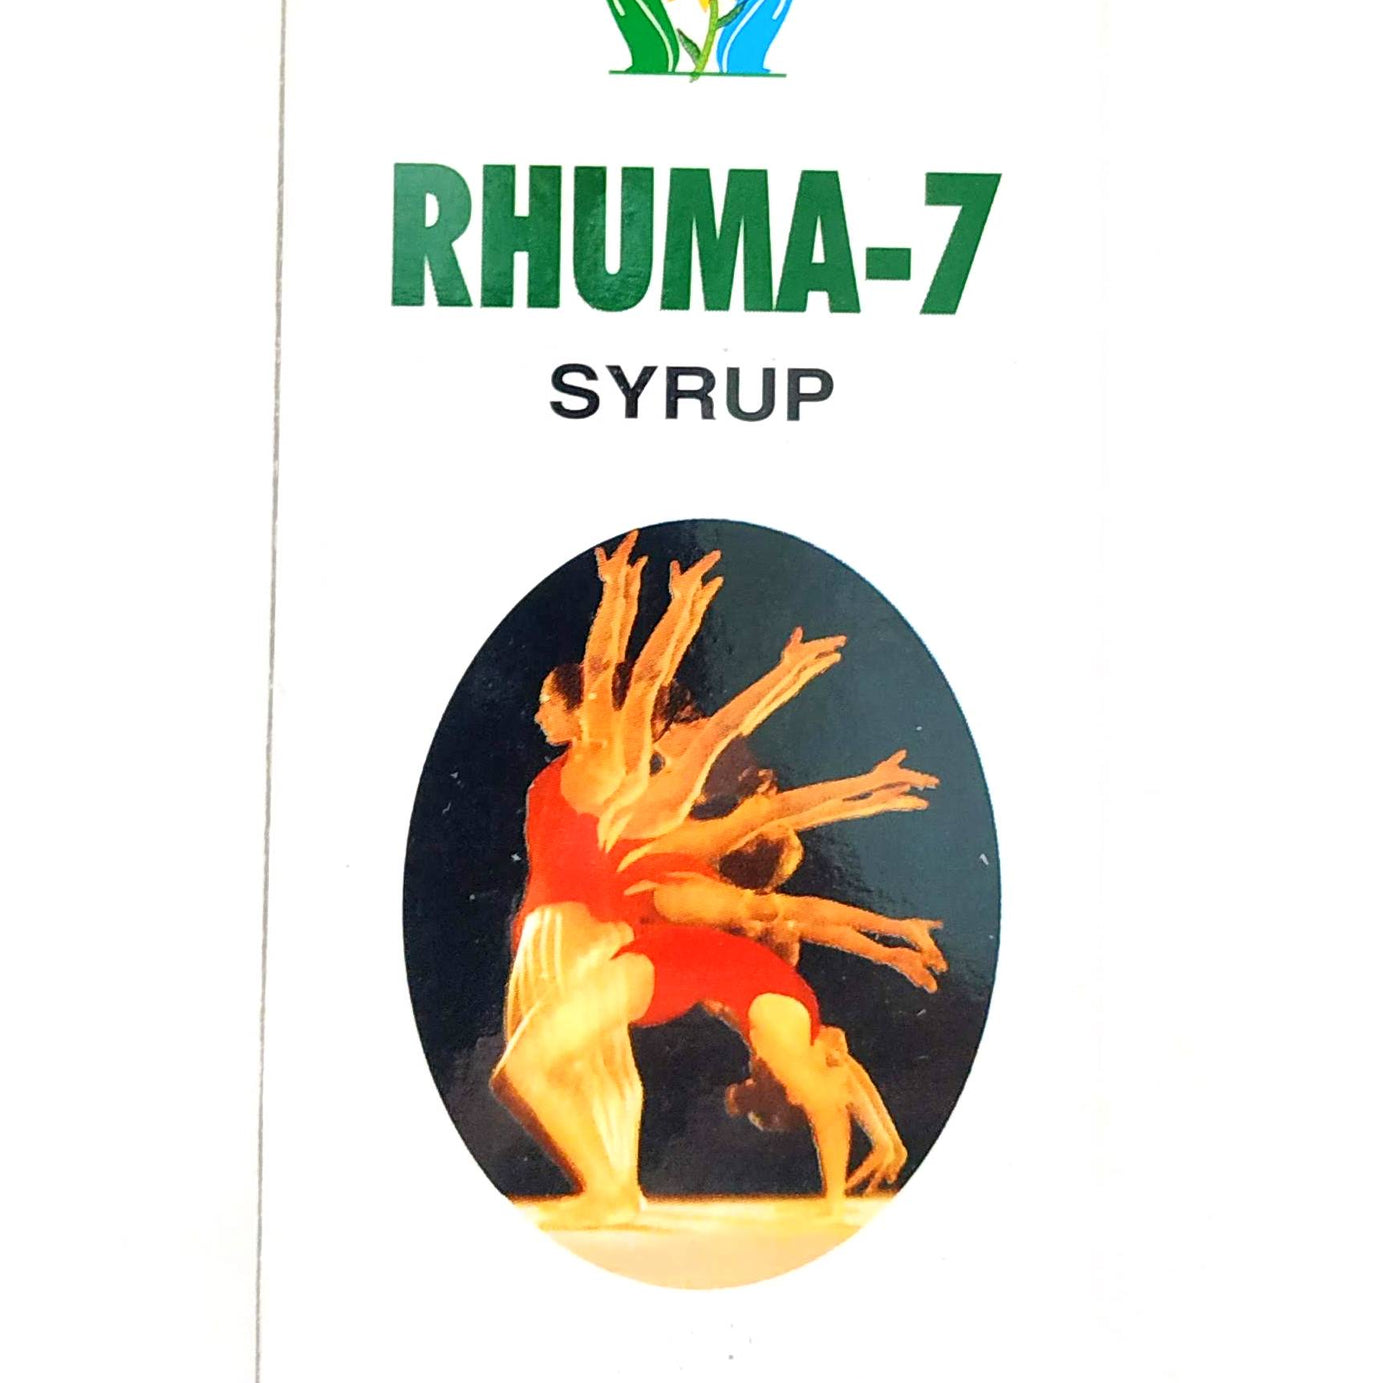 Shop Rhuma-7 Syrup 200ml at price 100.00 from Annai Aravindh Online - Ayush Care